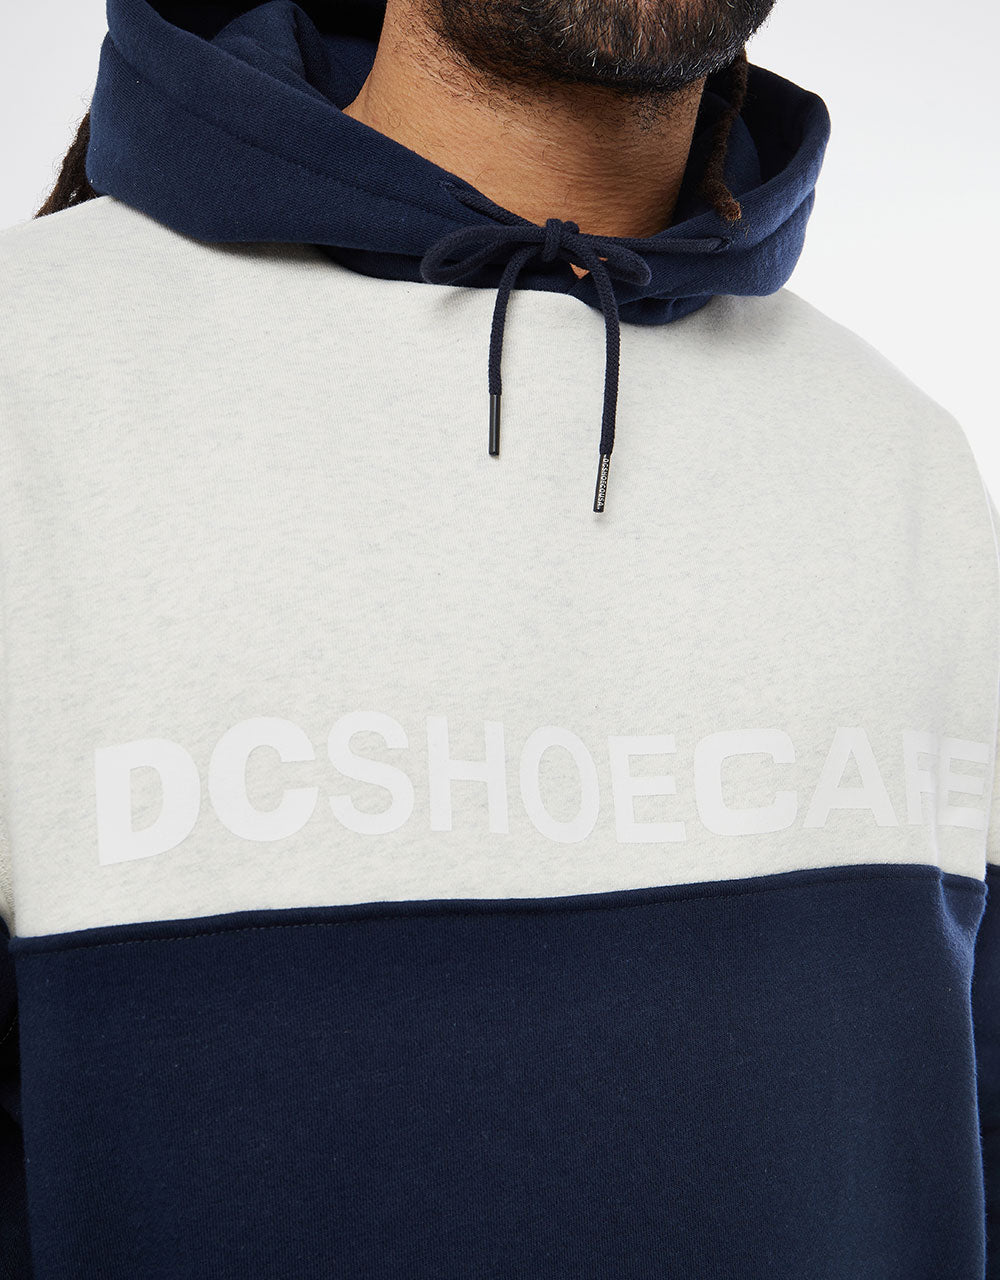 DC x Skateboard Café DCSHOECAFE Pullover Hoodie - Navy Blazer